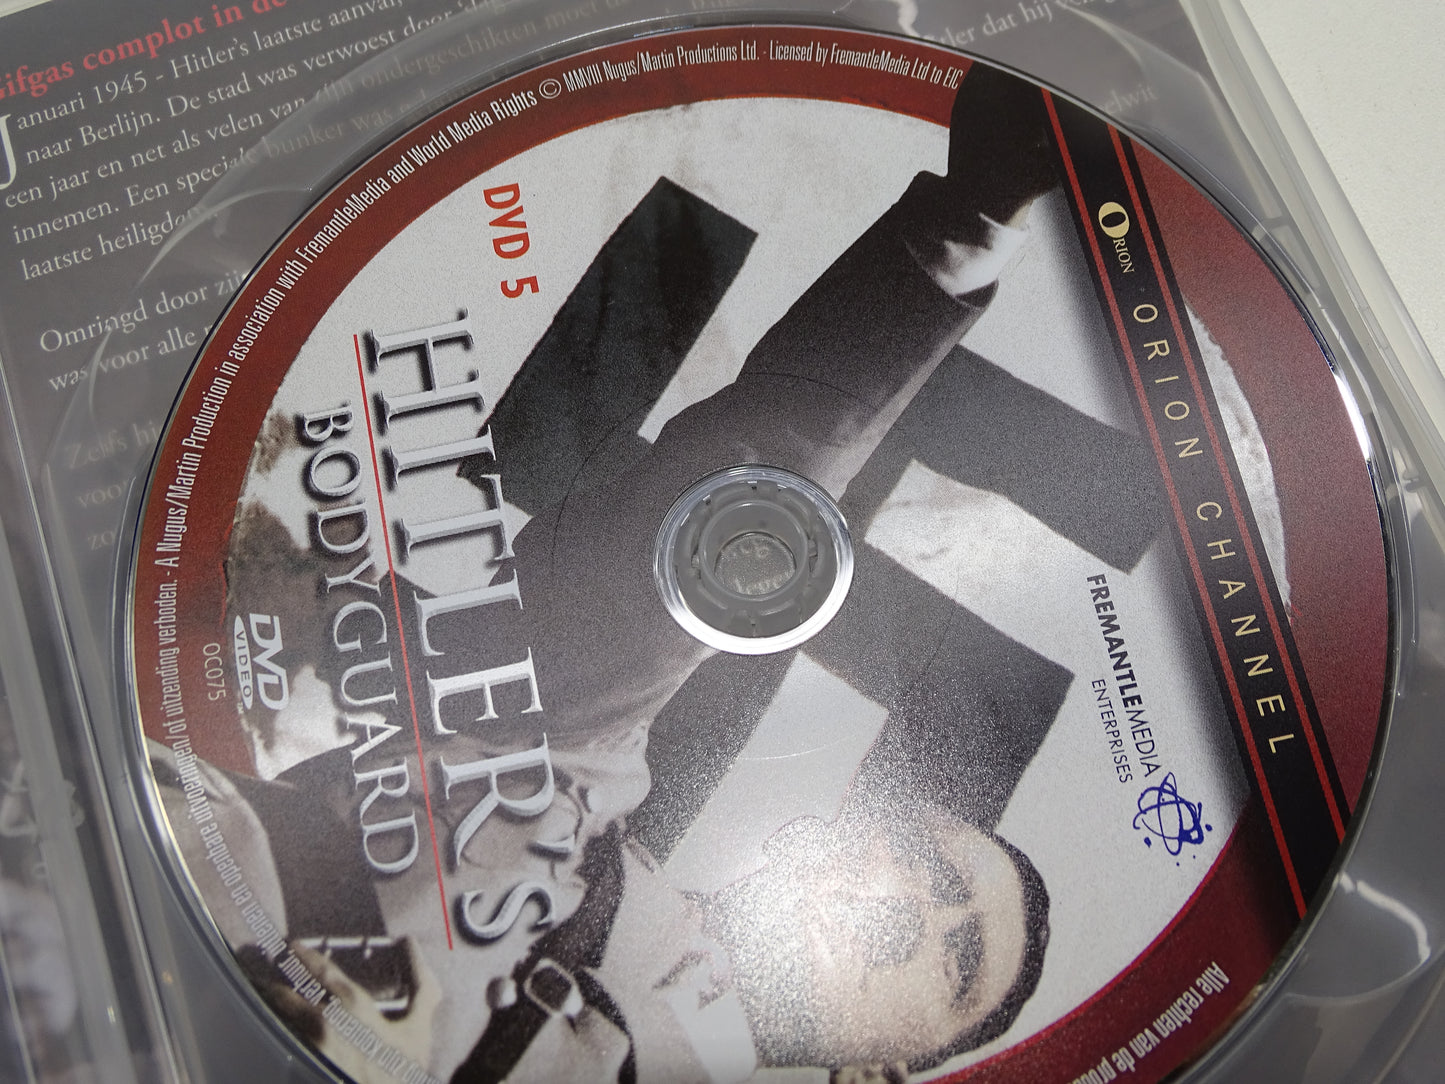 DVD Box: Hitler’s Bodyguard, 2009